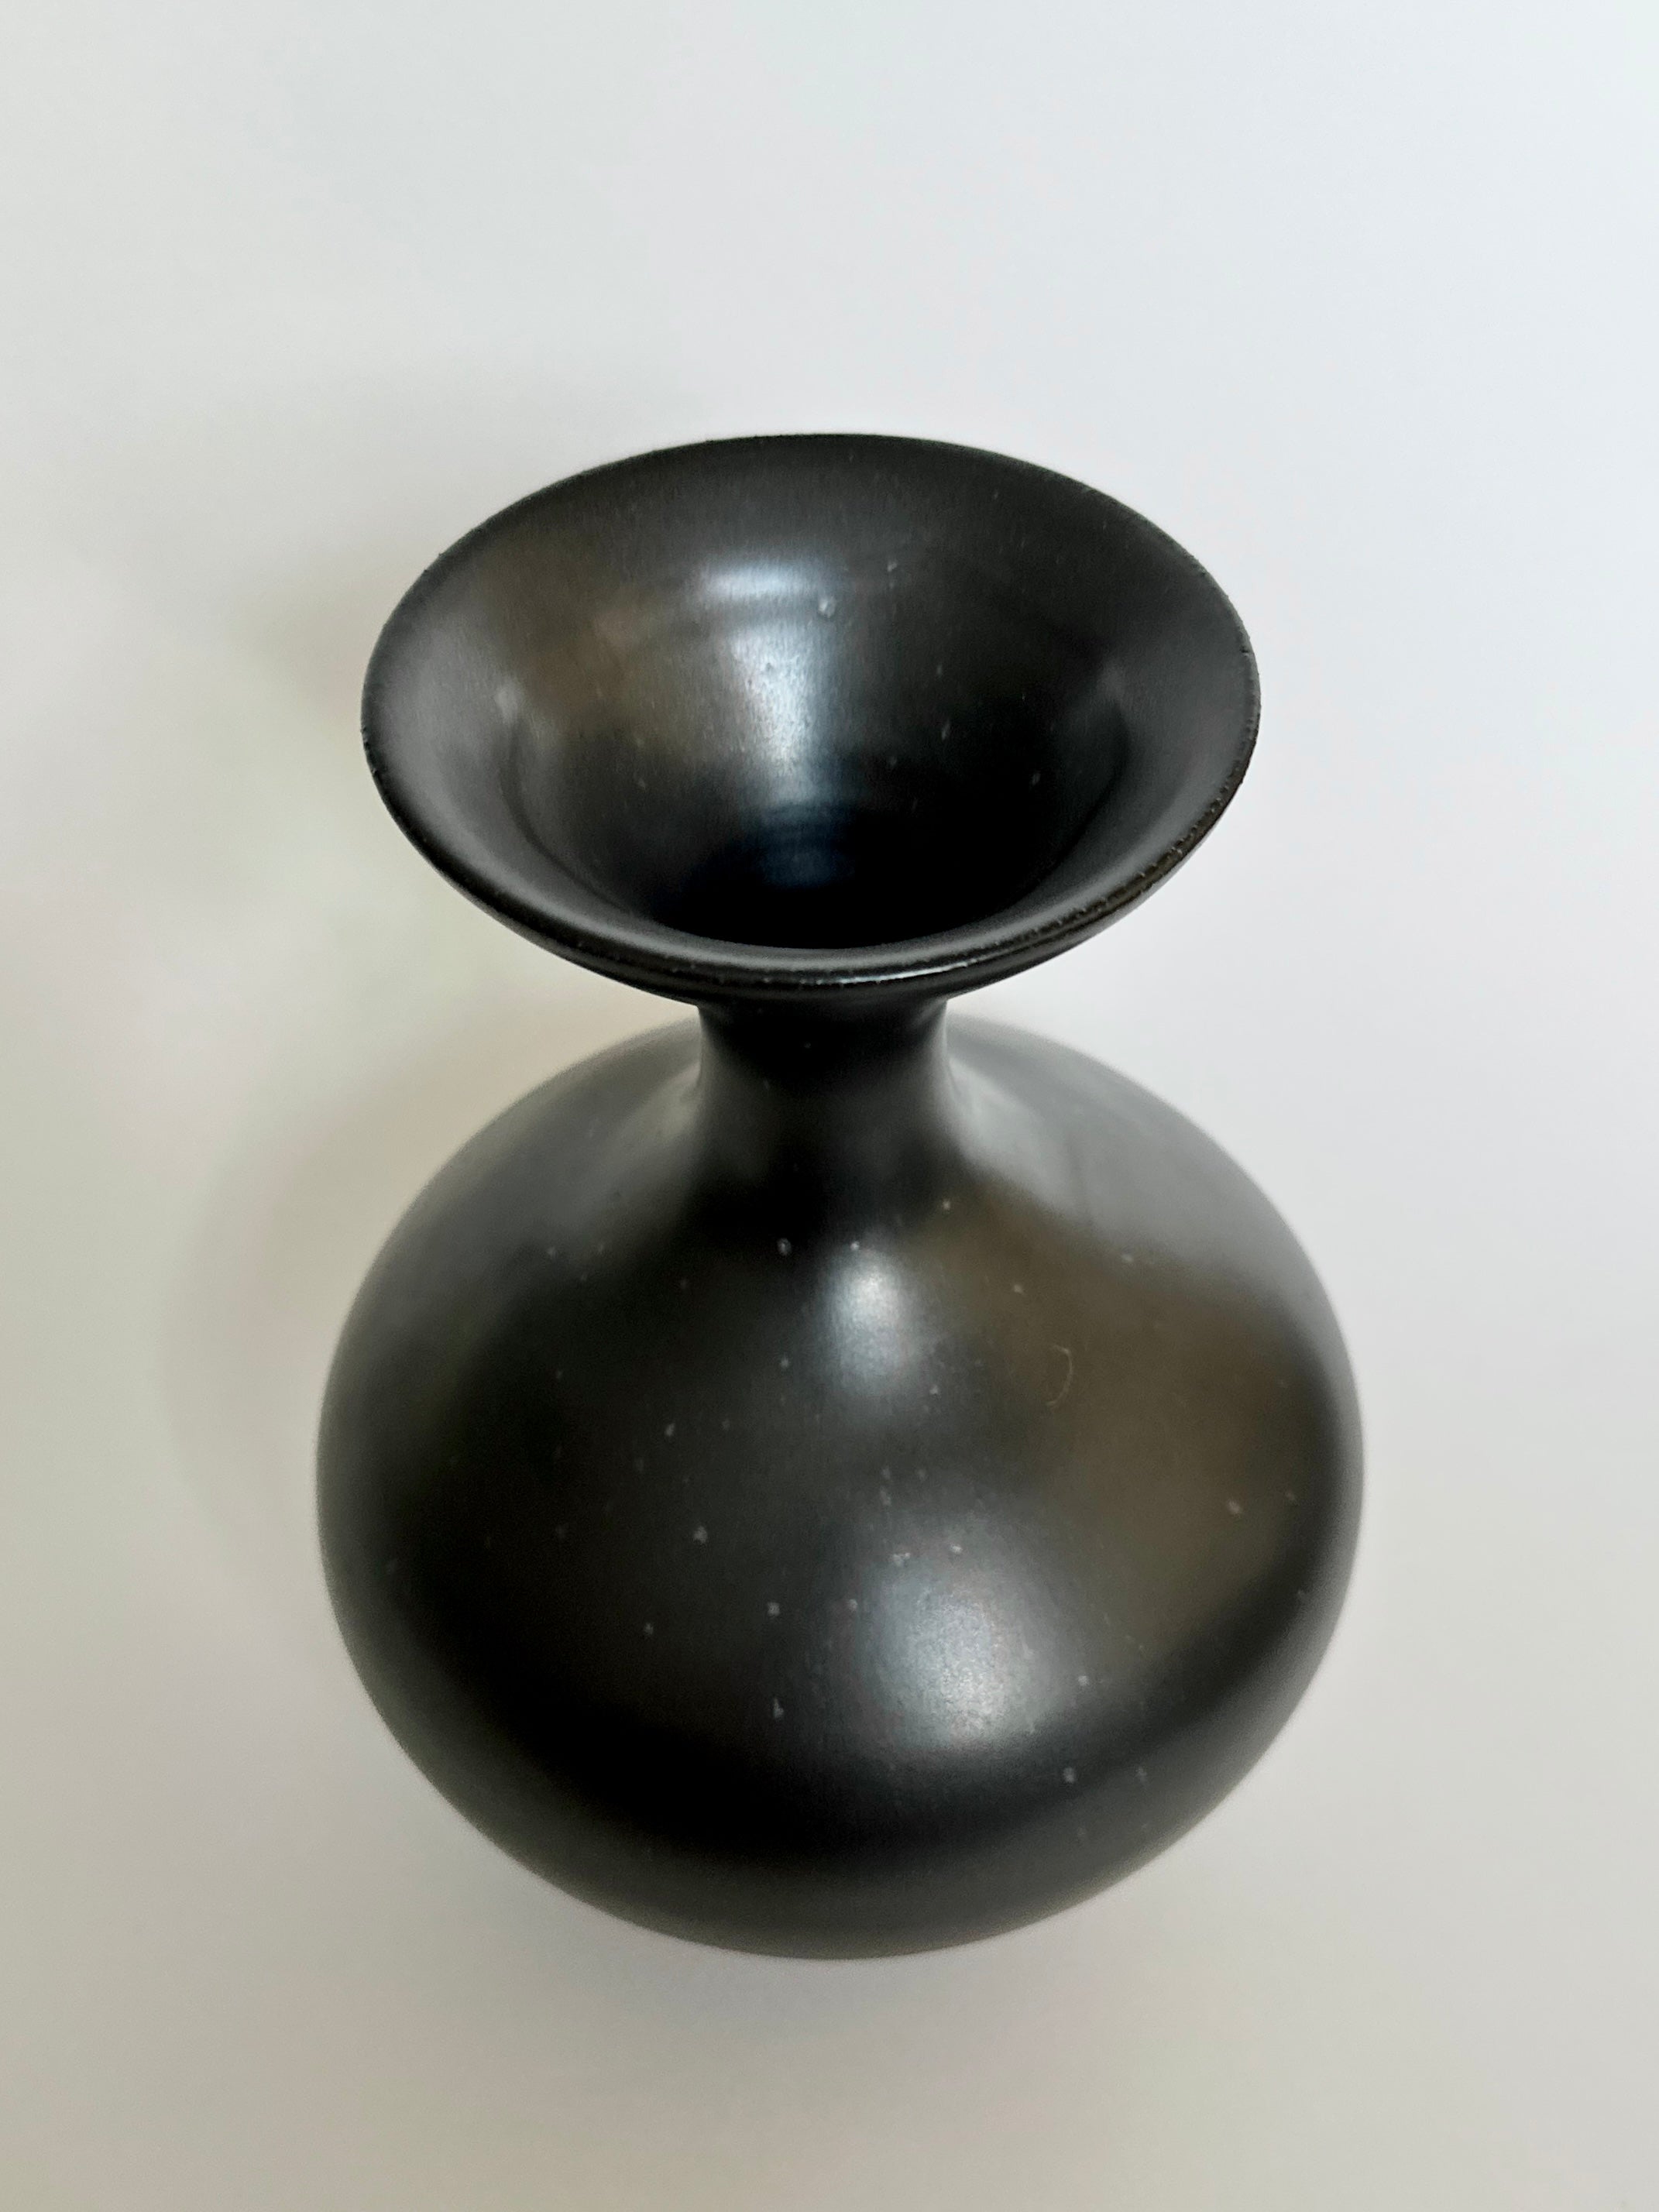 Black satin glazed vessel No. 1